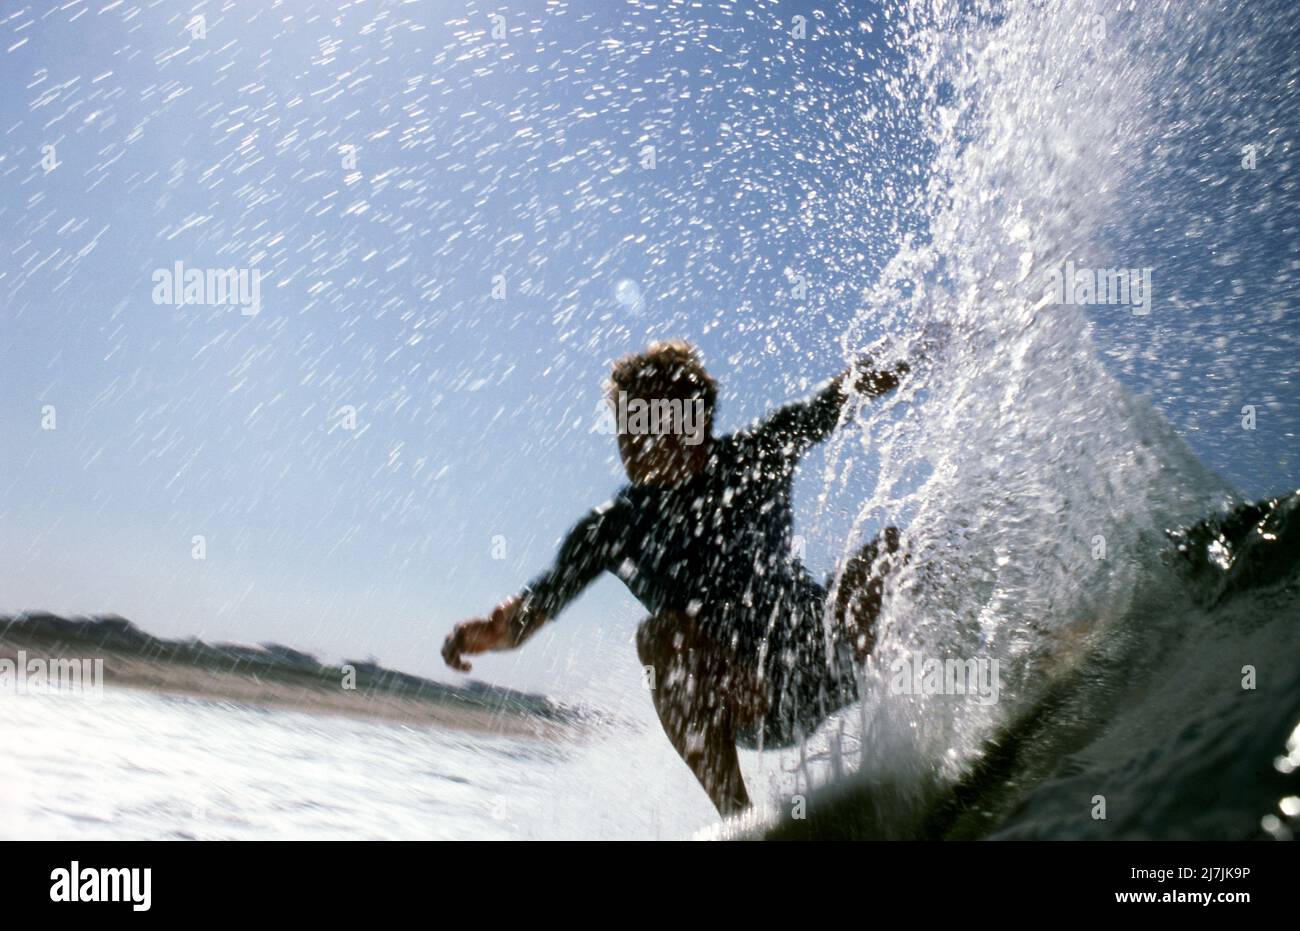 A SURFER RIDES A WAVE, BONDI, NEW SOUTH WALES, AUSTRALIA. Stock Photo